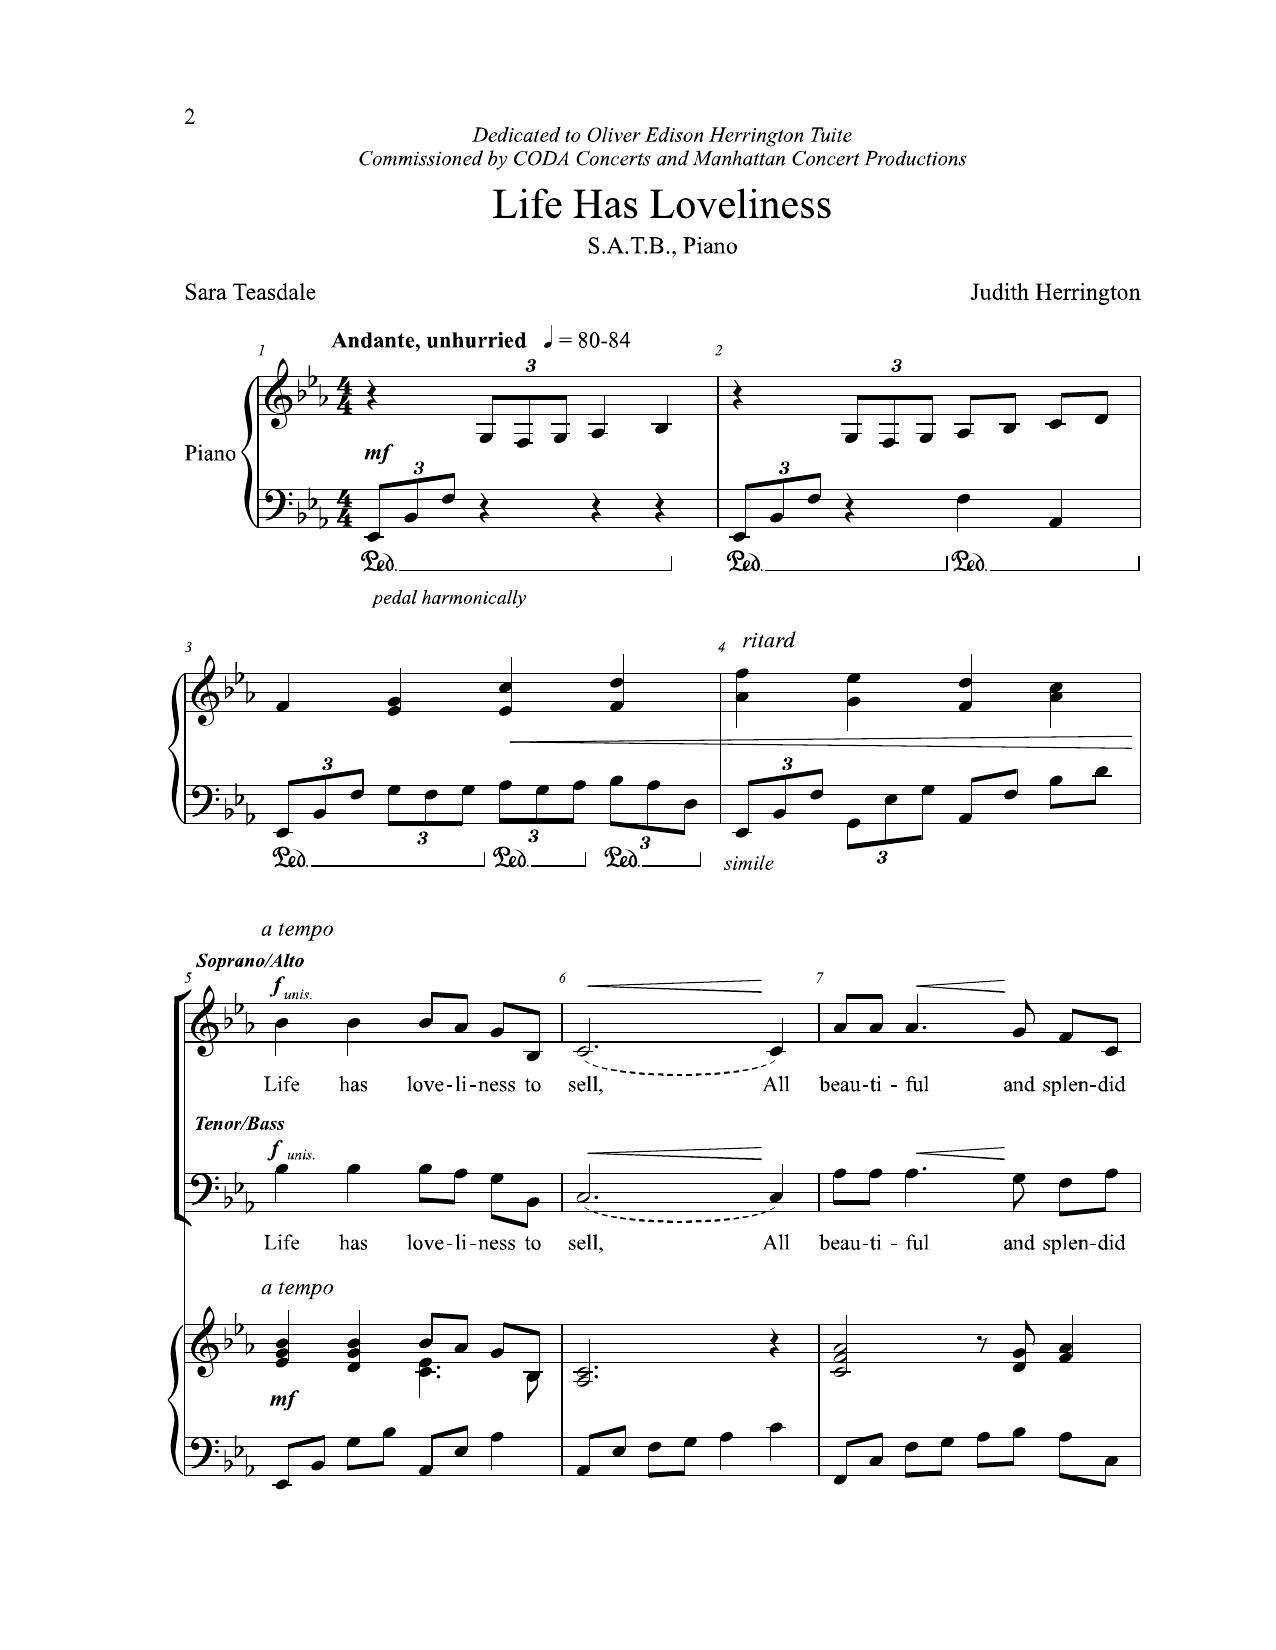 Judith Herrington Life Has Loveliness Sheet Music Notes & Chords for SAB Choir - Download or Print PDF